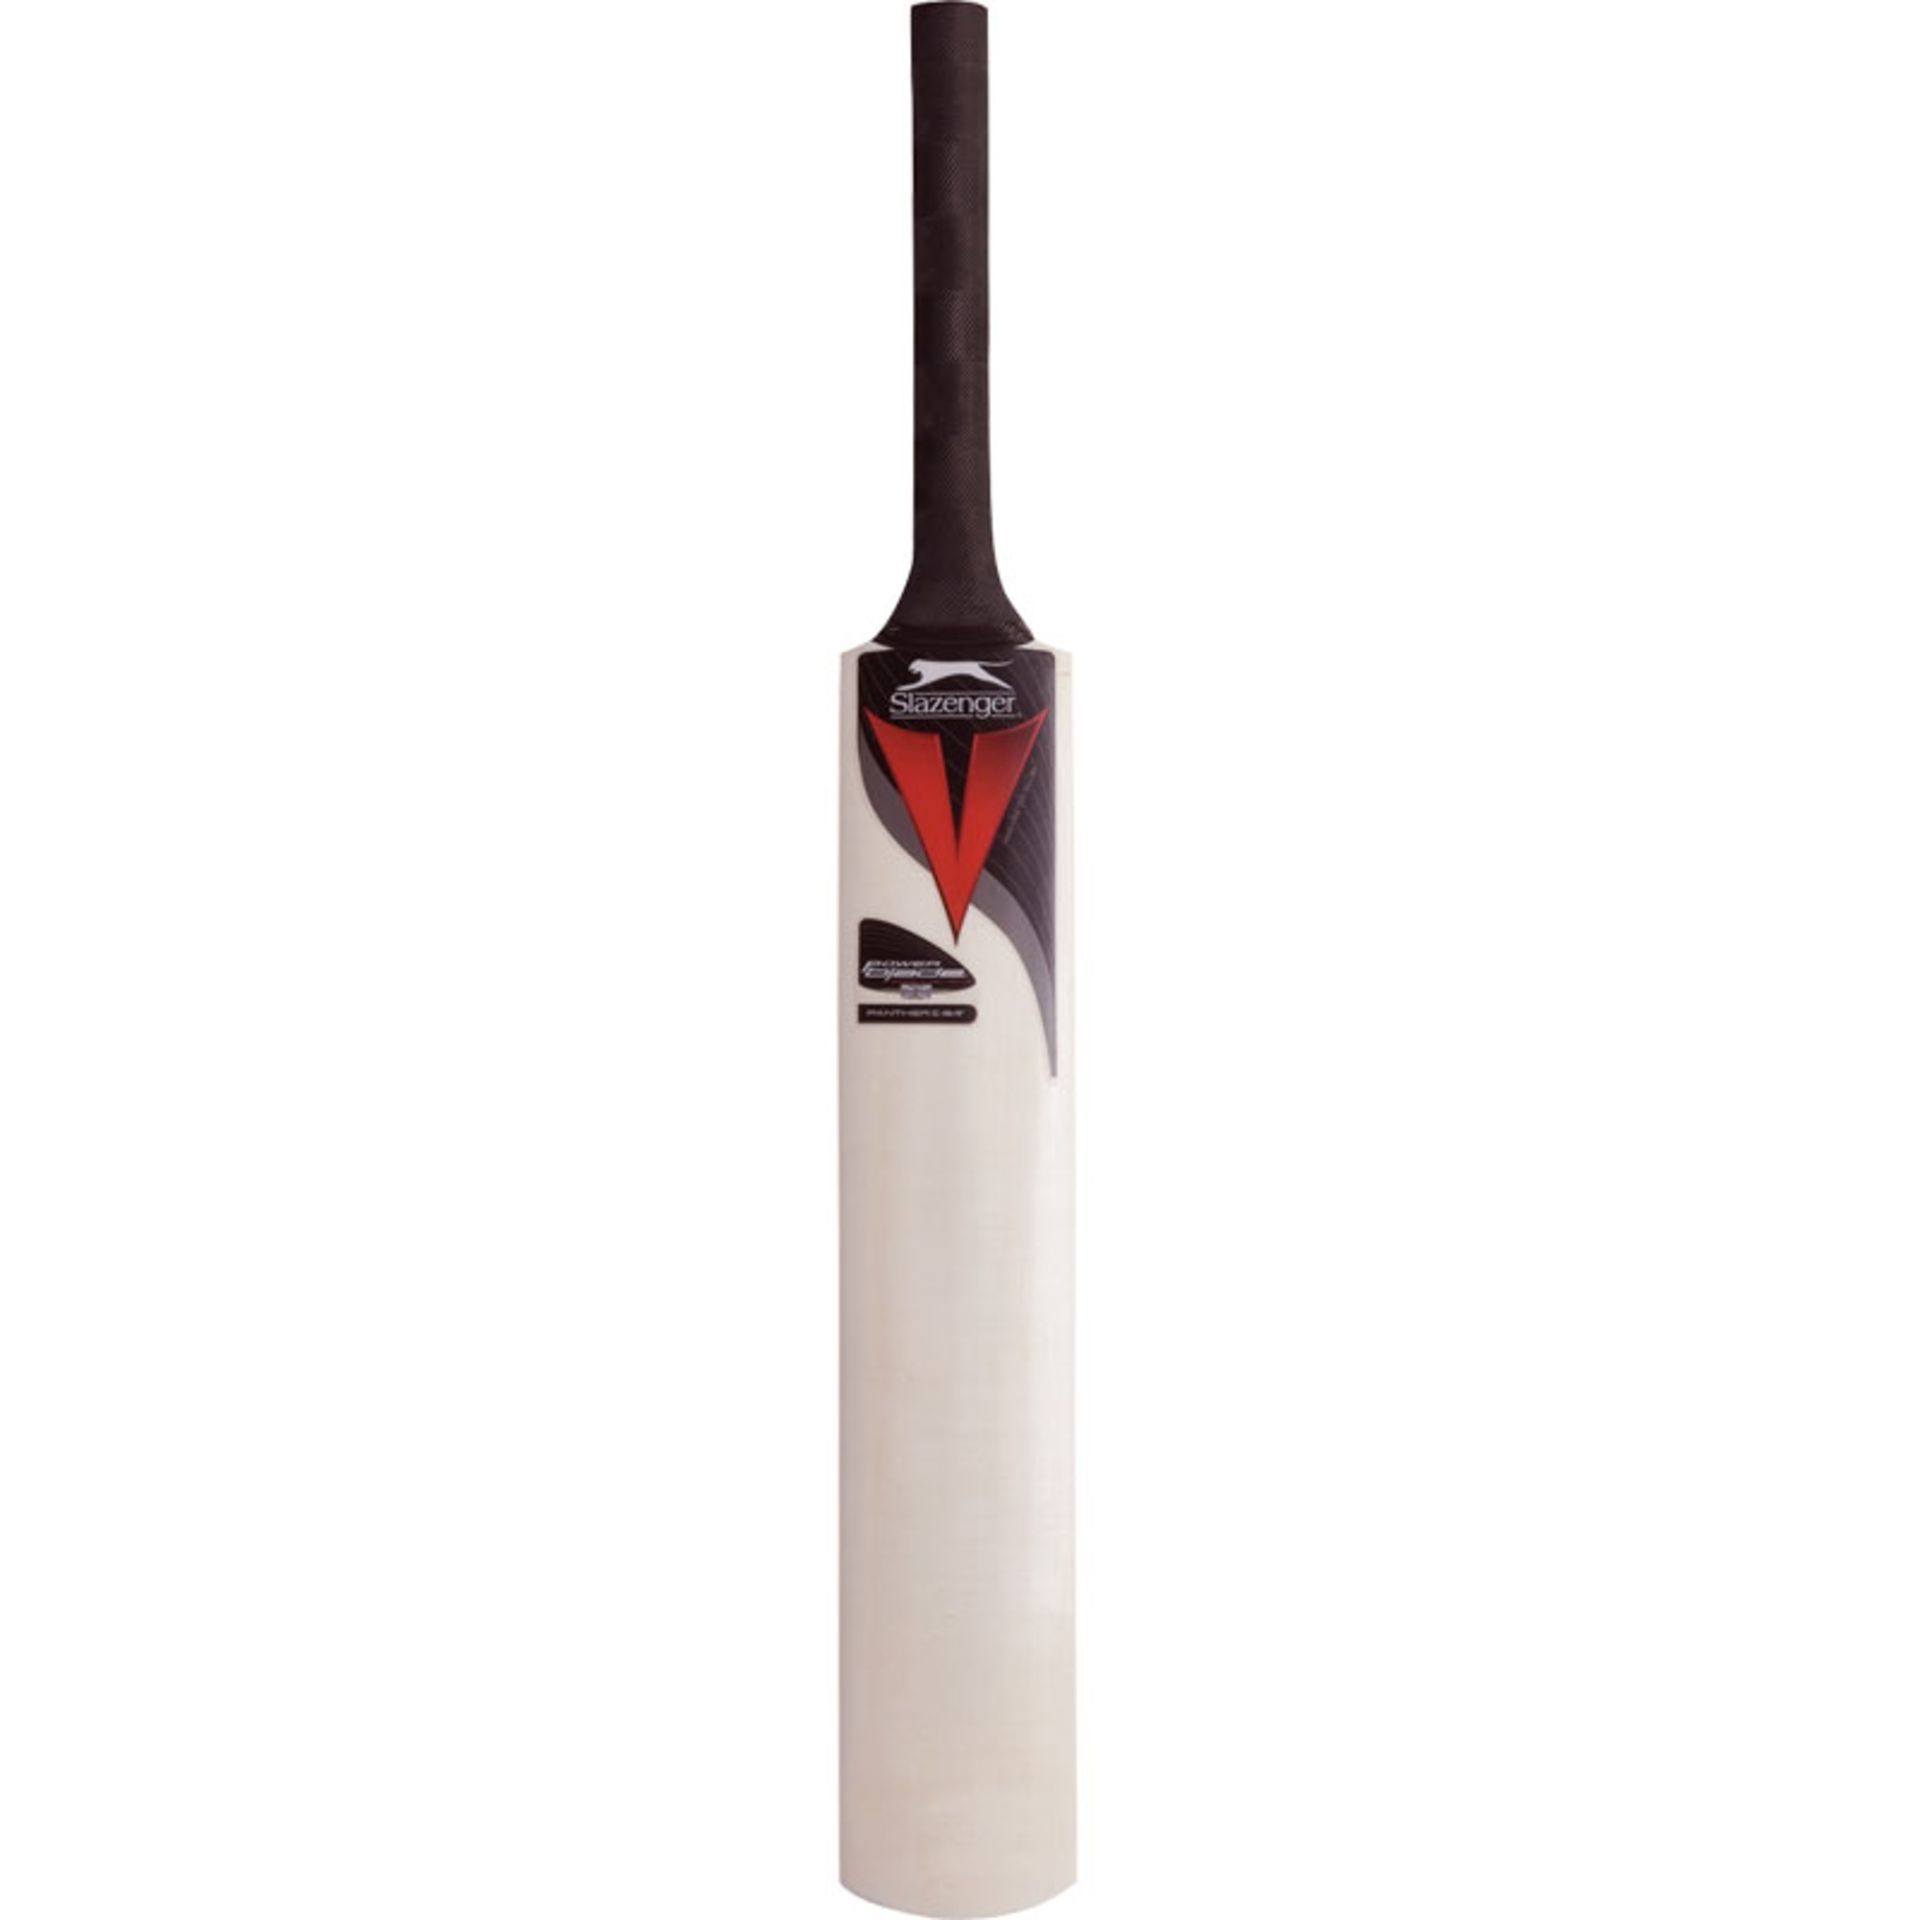 V Brand New Slazenger Power Blade Panther Junior Size 6 Cricket Bat ISP £15 (Newitts)